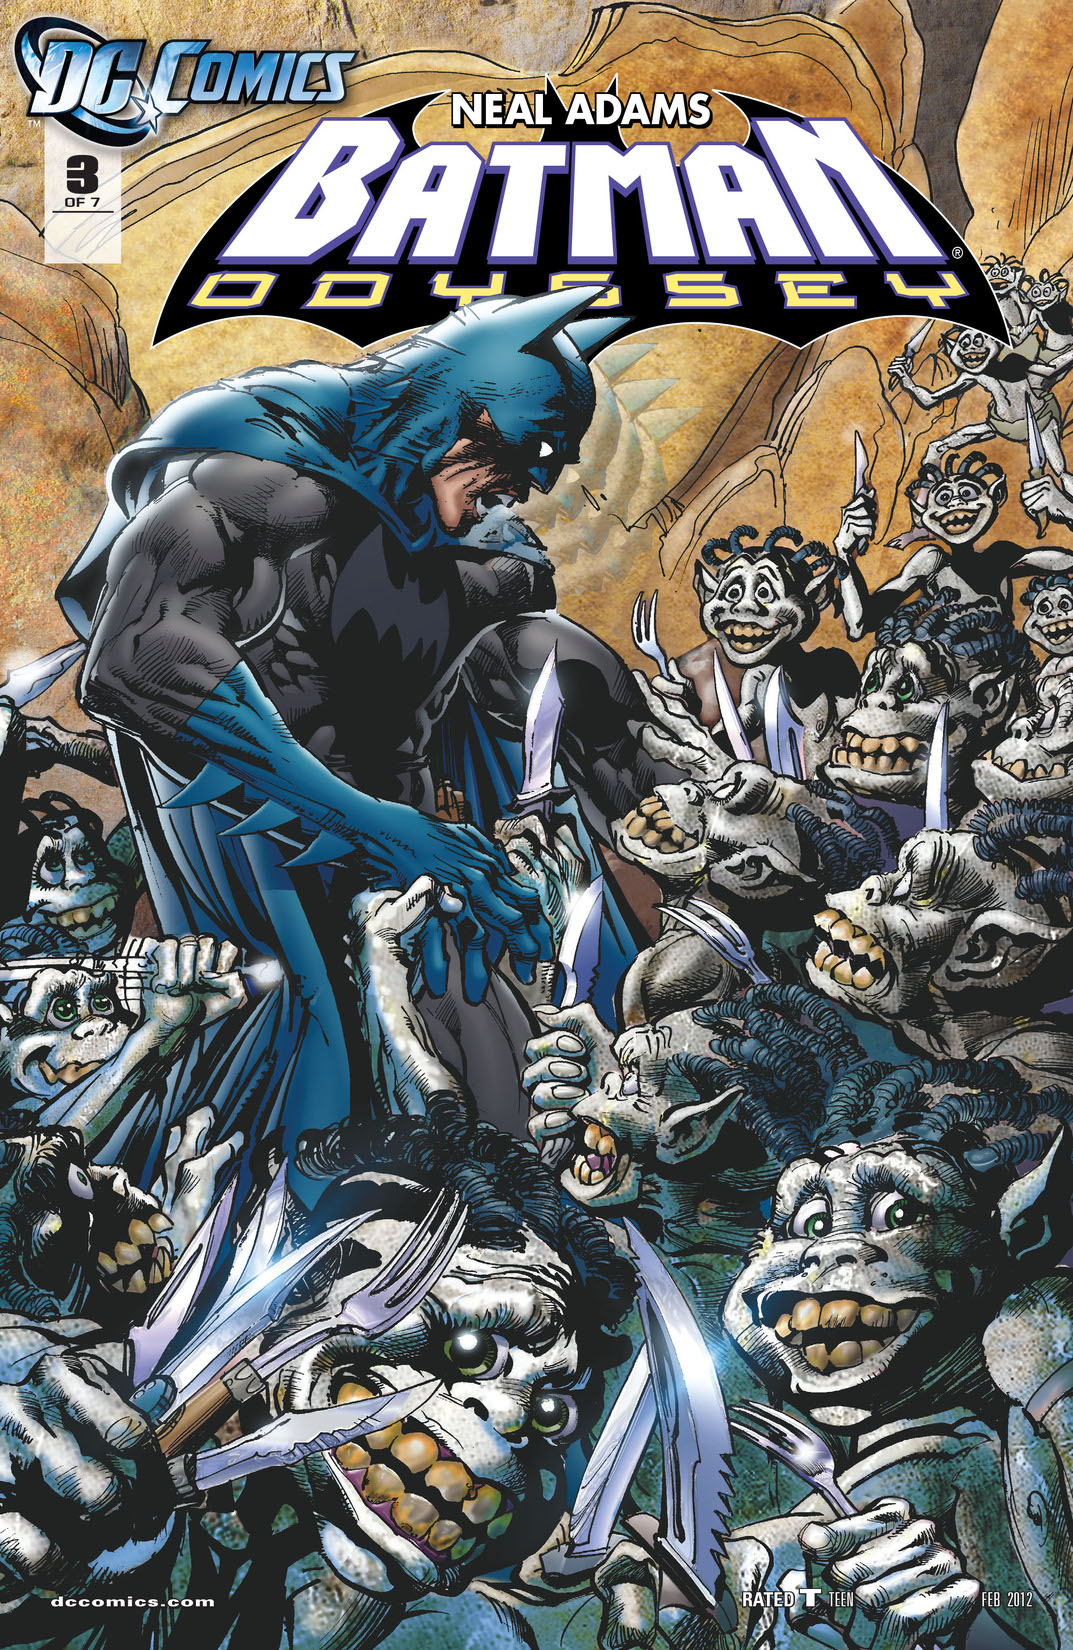 Batman: Odyssey Vol. 2 #3 preview images